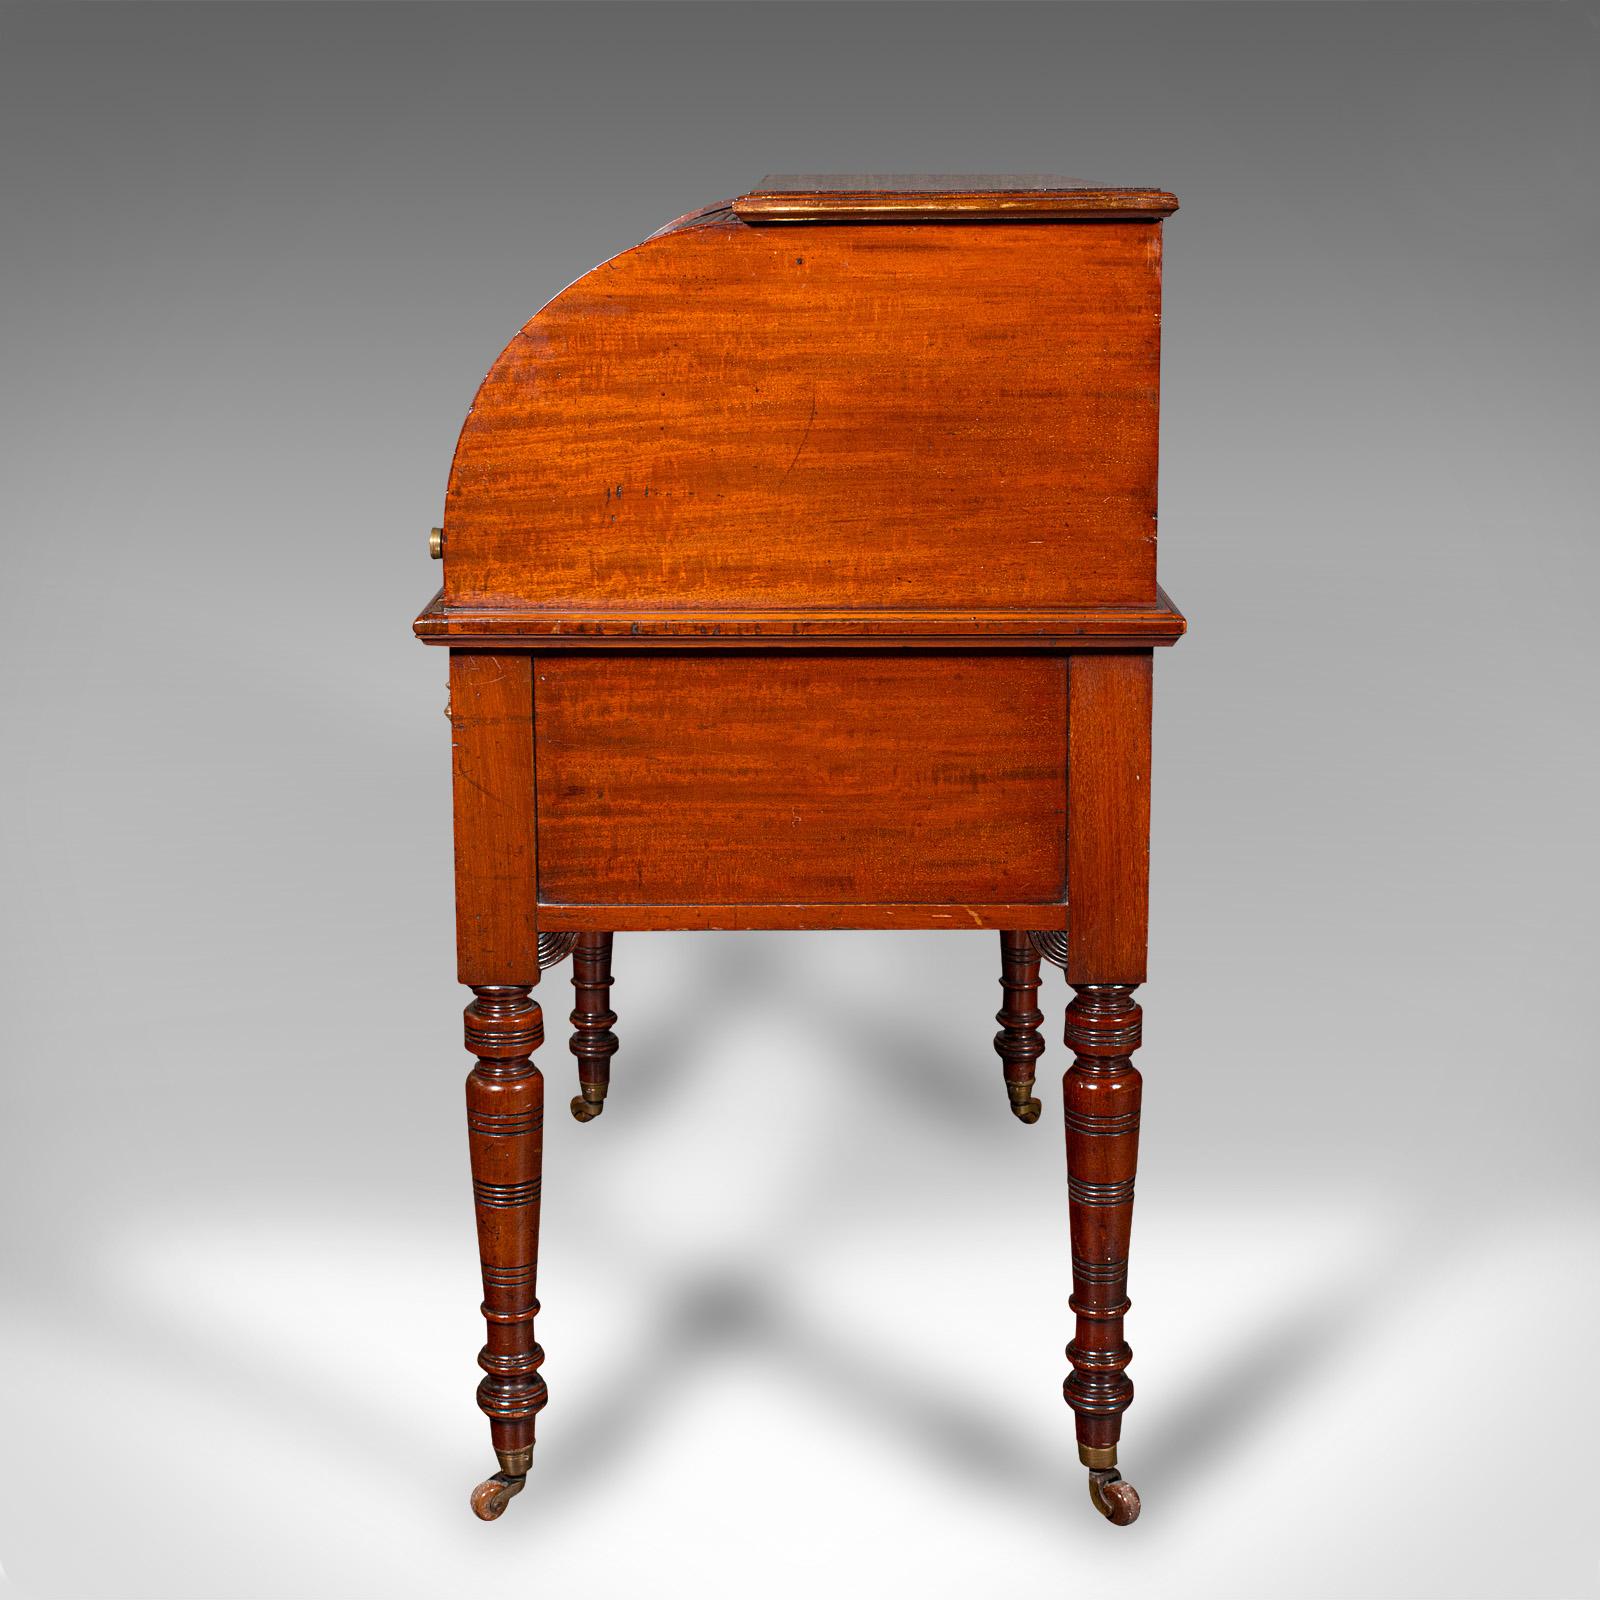 Wood Antique Roll-Top Desk, English, Bureau, Aesthetic Period, Victorian, Circa 1880 For Sale